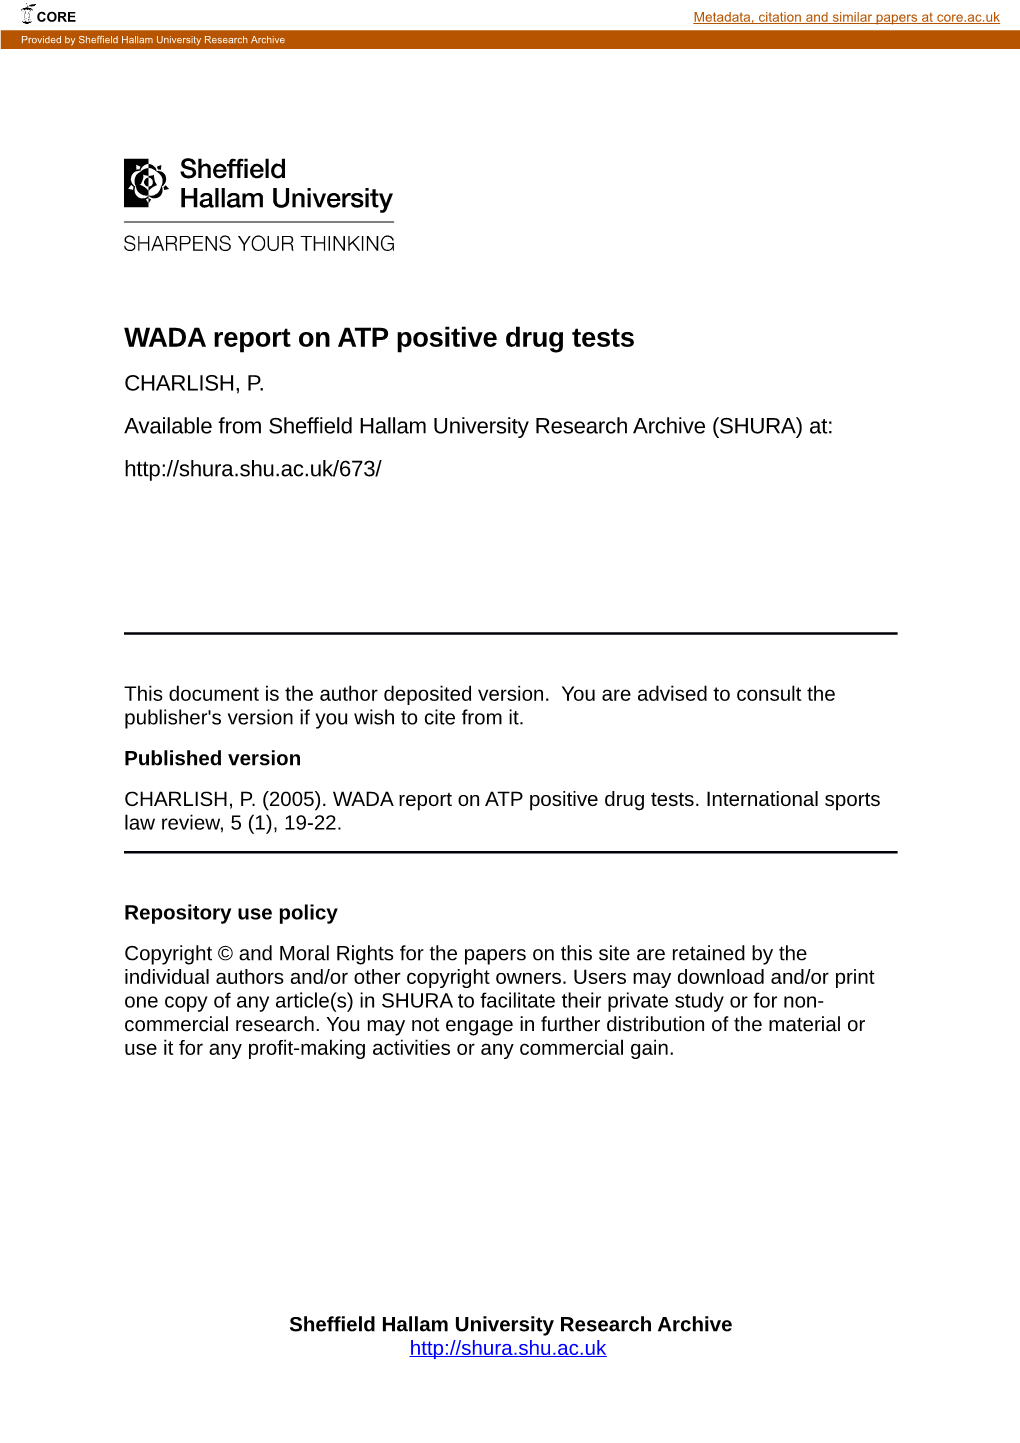 WADA Report on ATP Positive Drug Tests CHARLISH, P